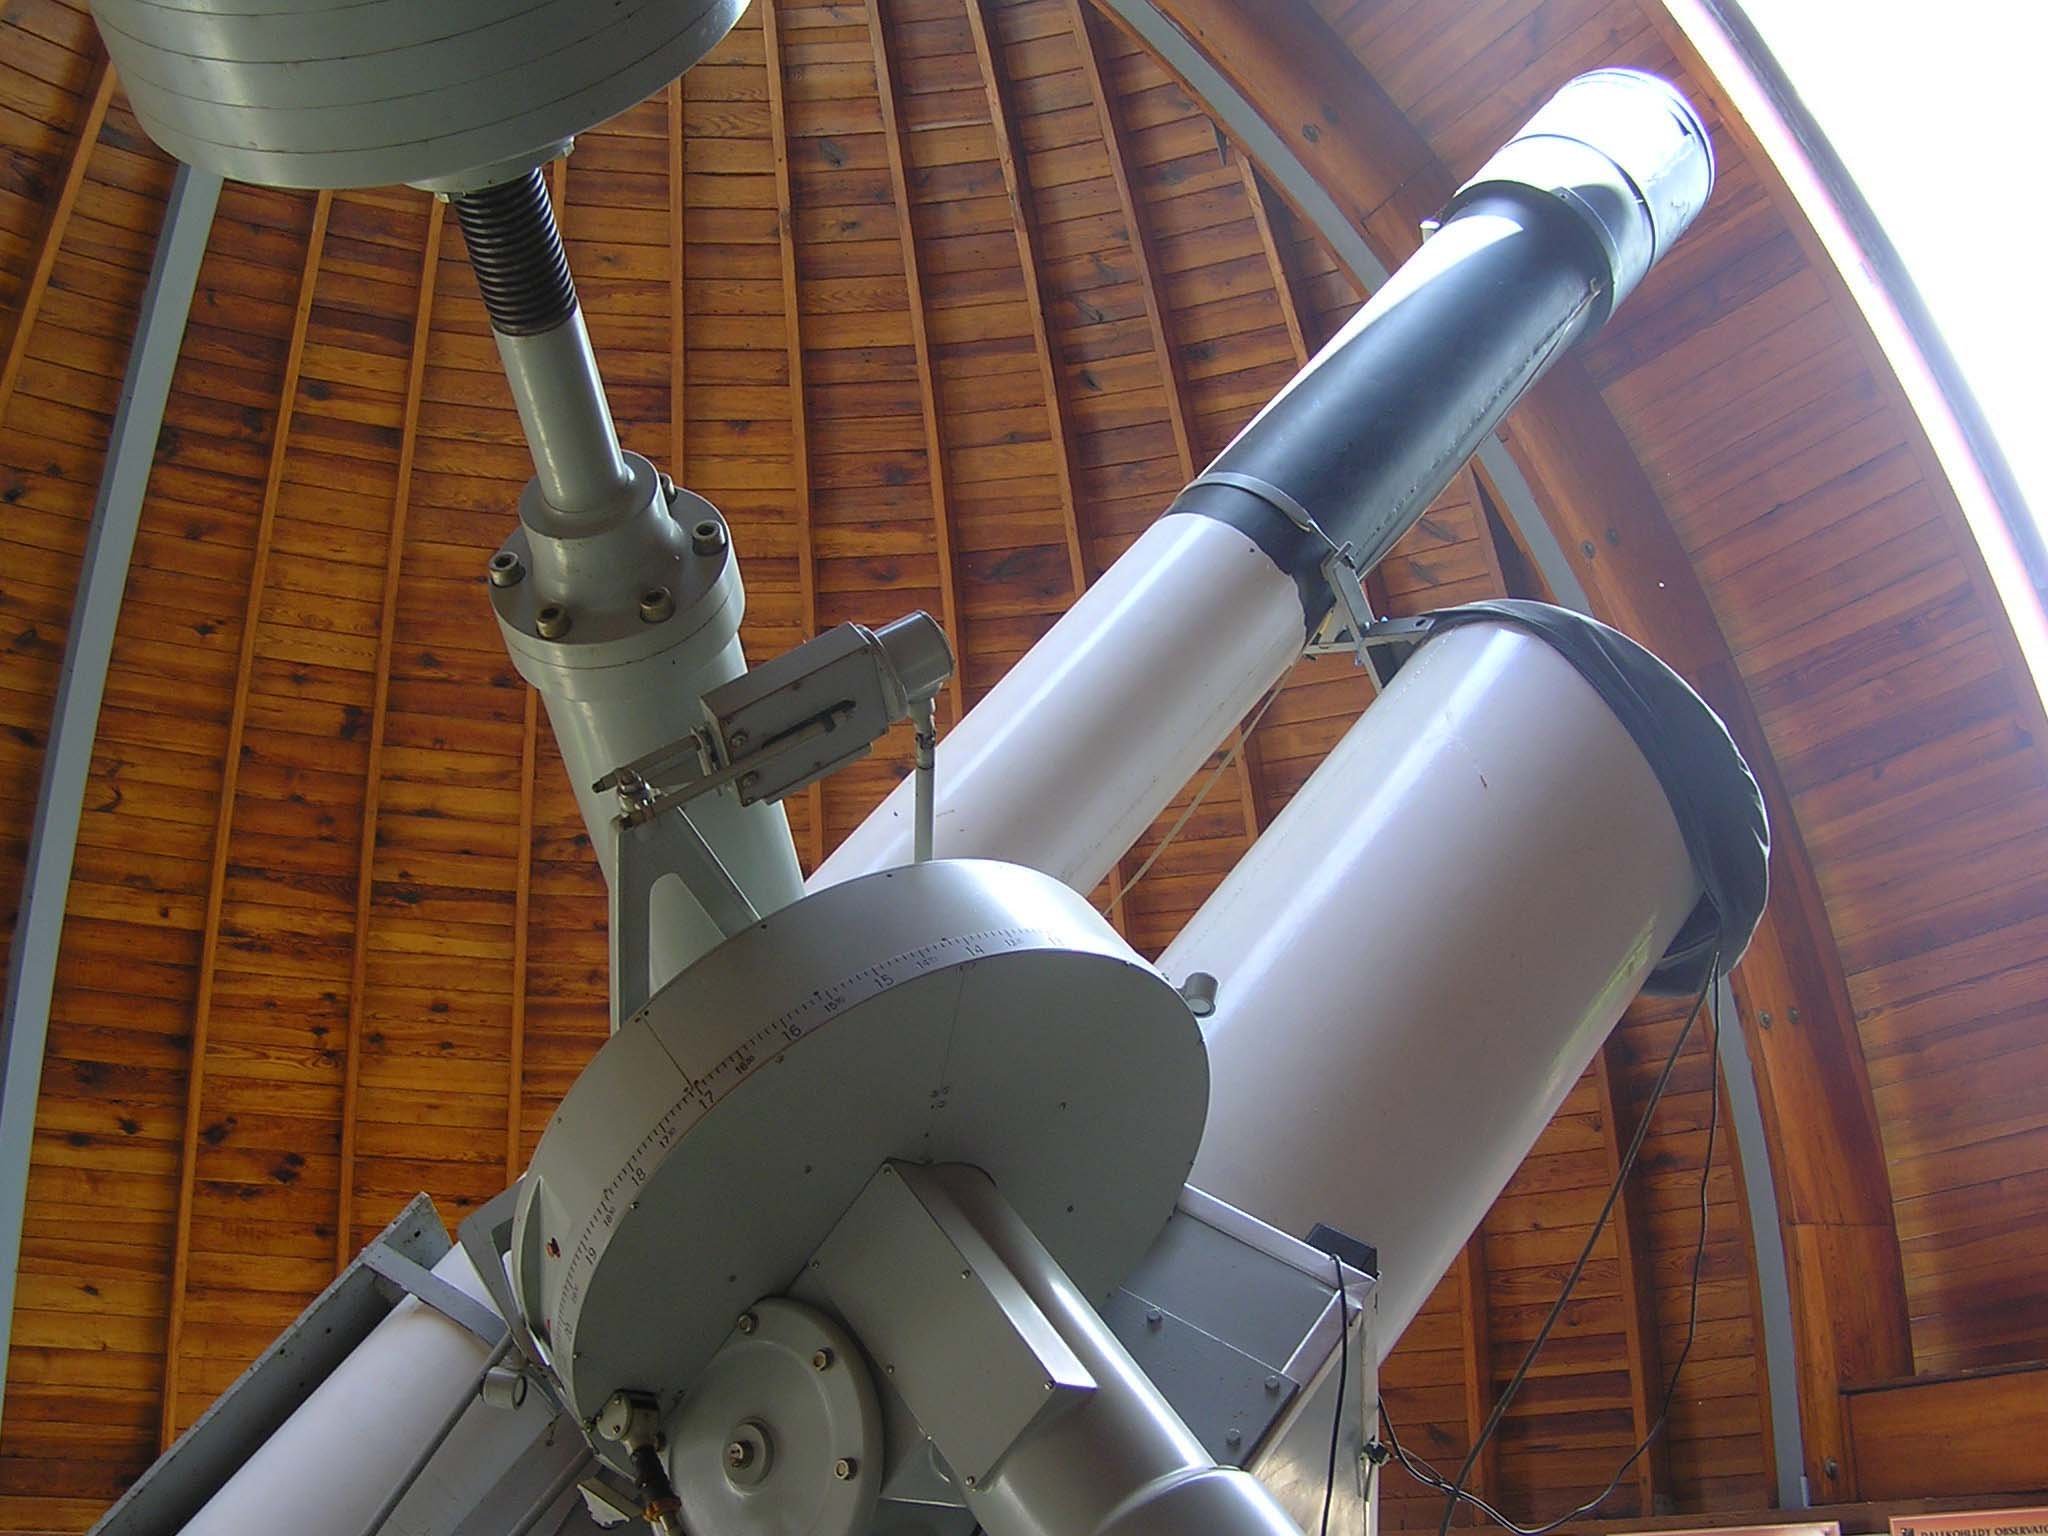 Plzenski observatorij